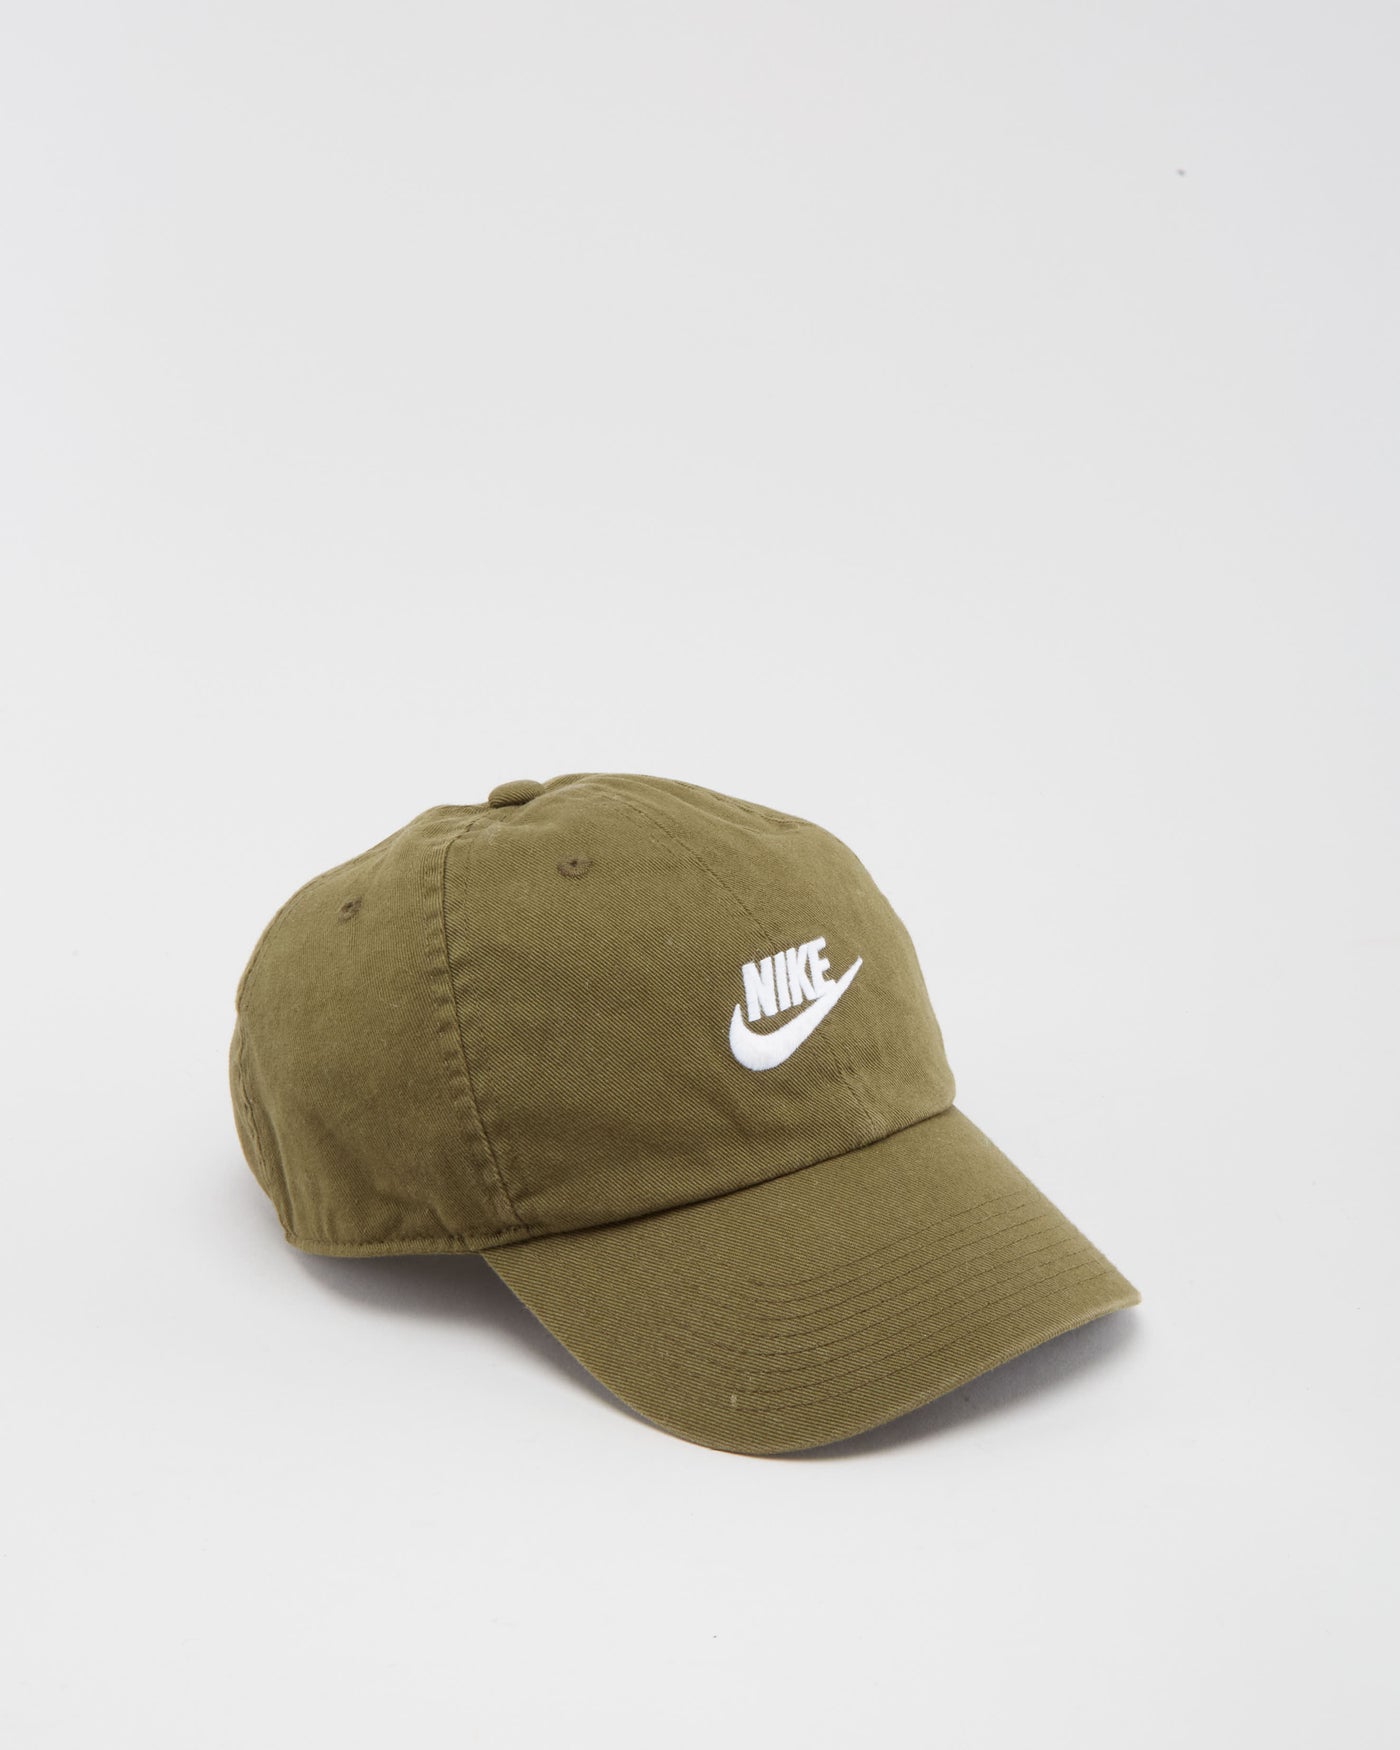 Nike Green Baseball Cap